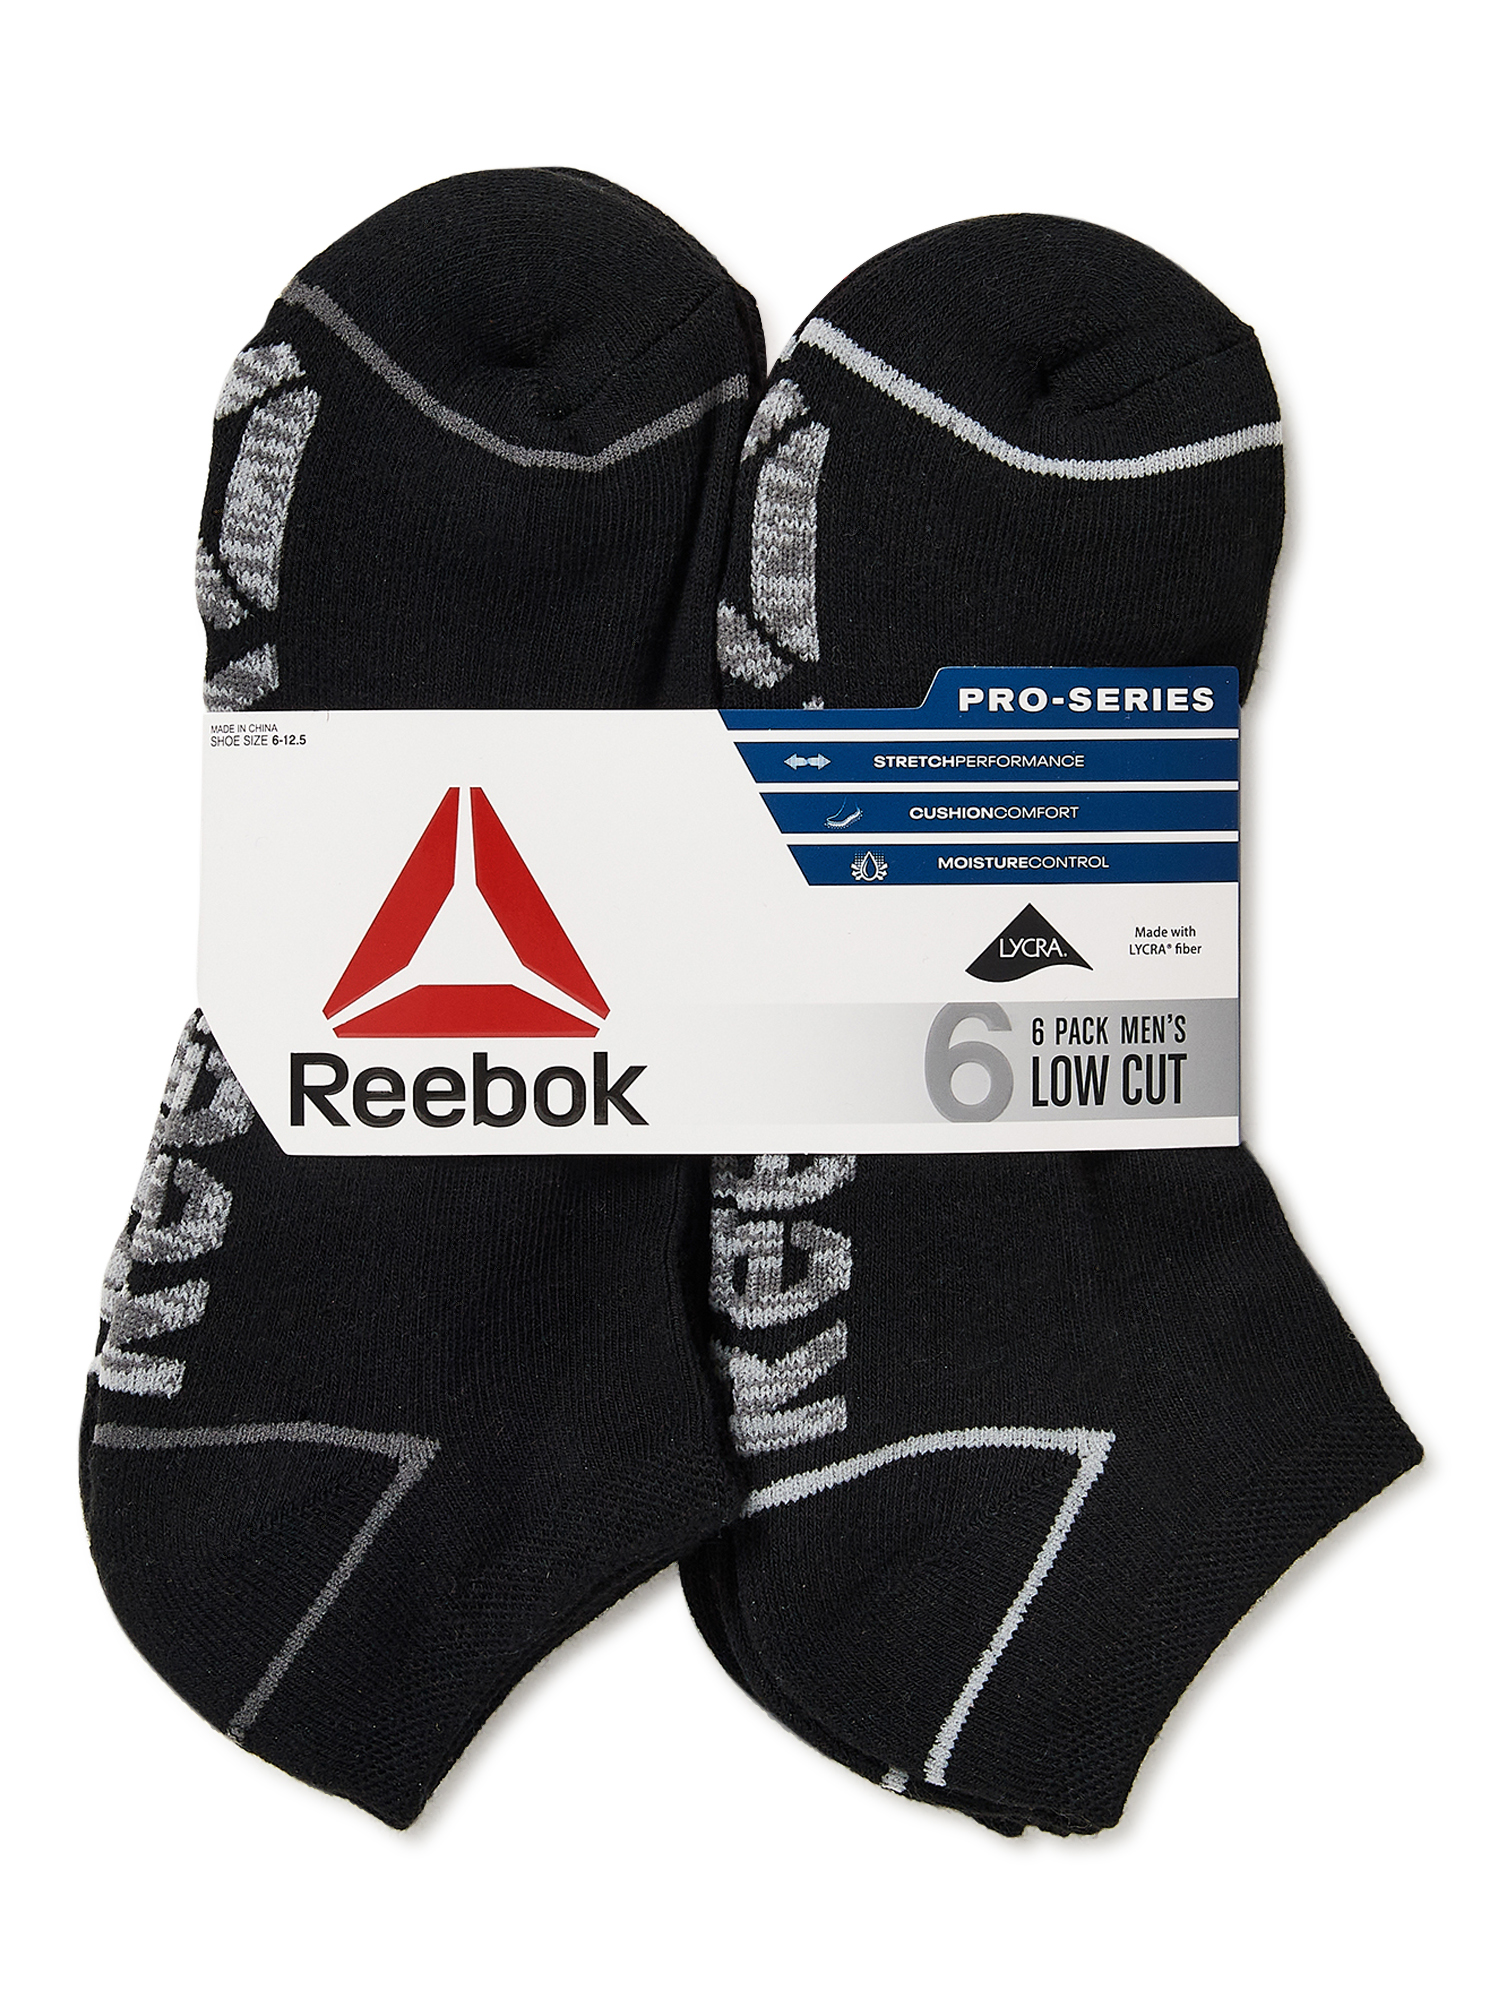 Reebok Men's Pro Series Low Cut Socks, 6-Pack - image 4 of 8